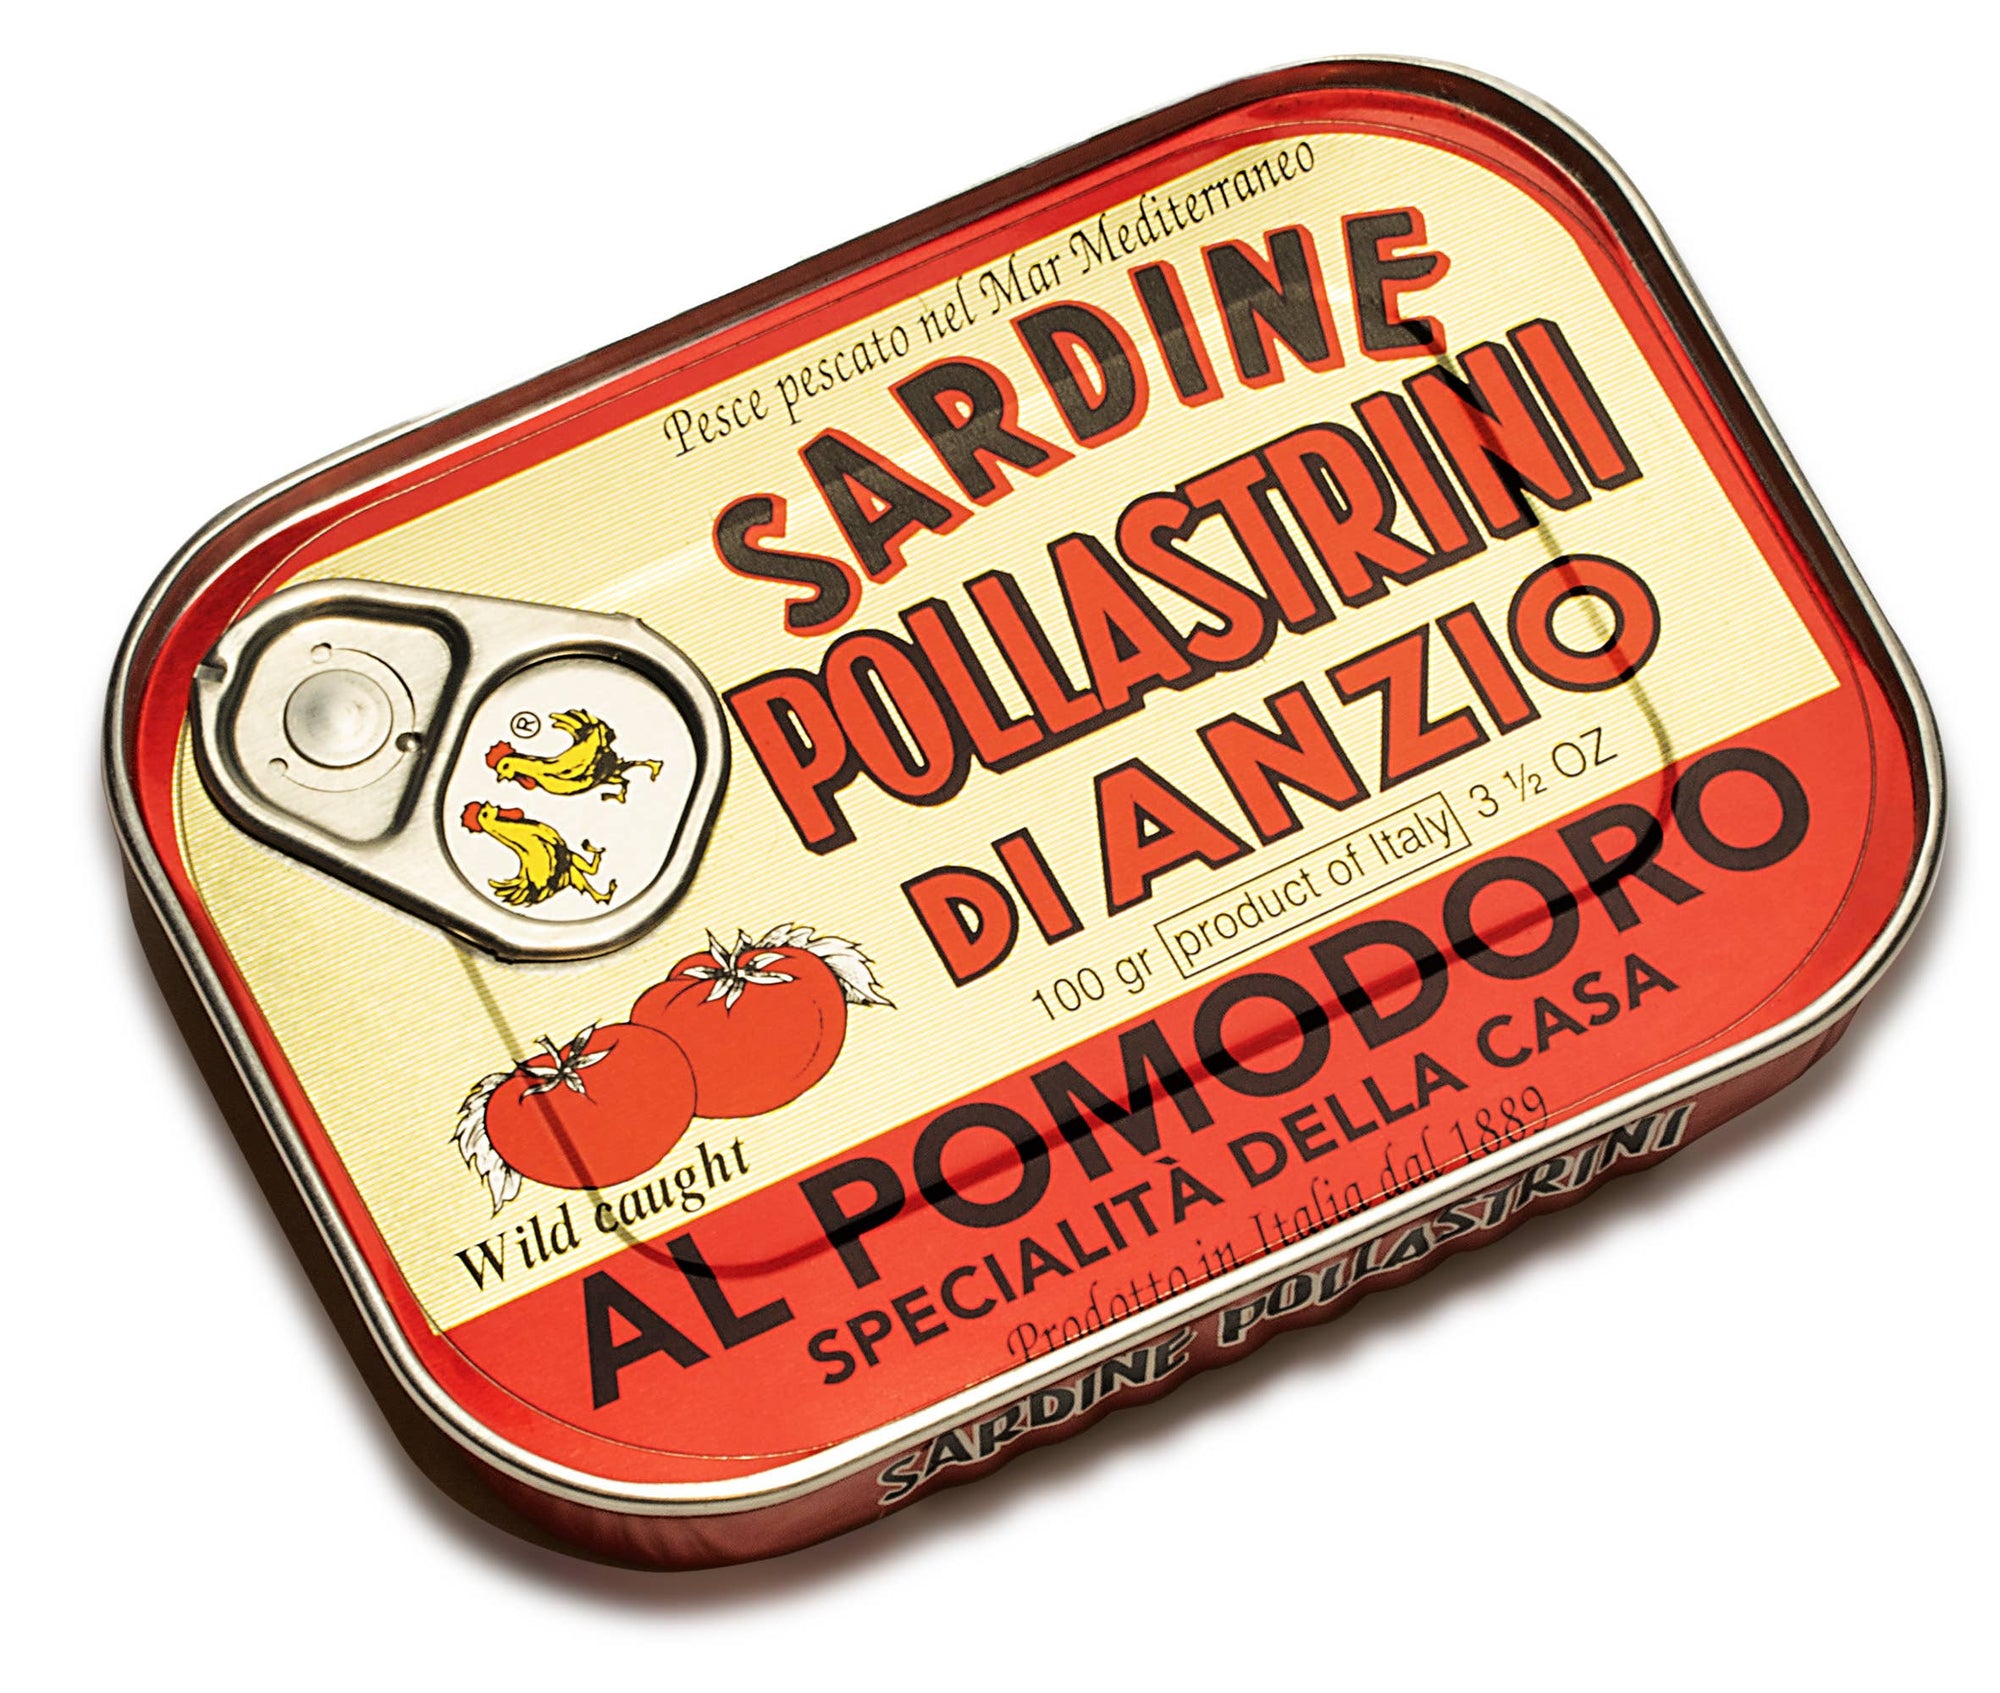 Pollastrini Sardines in Tomato Sauce - Space Camp